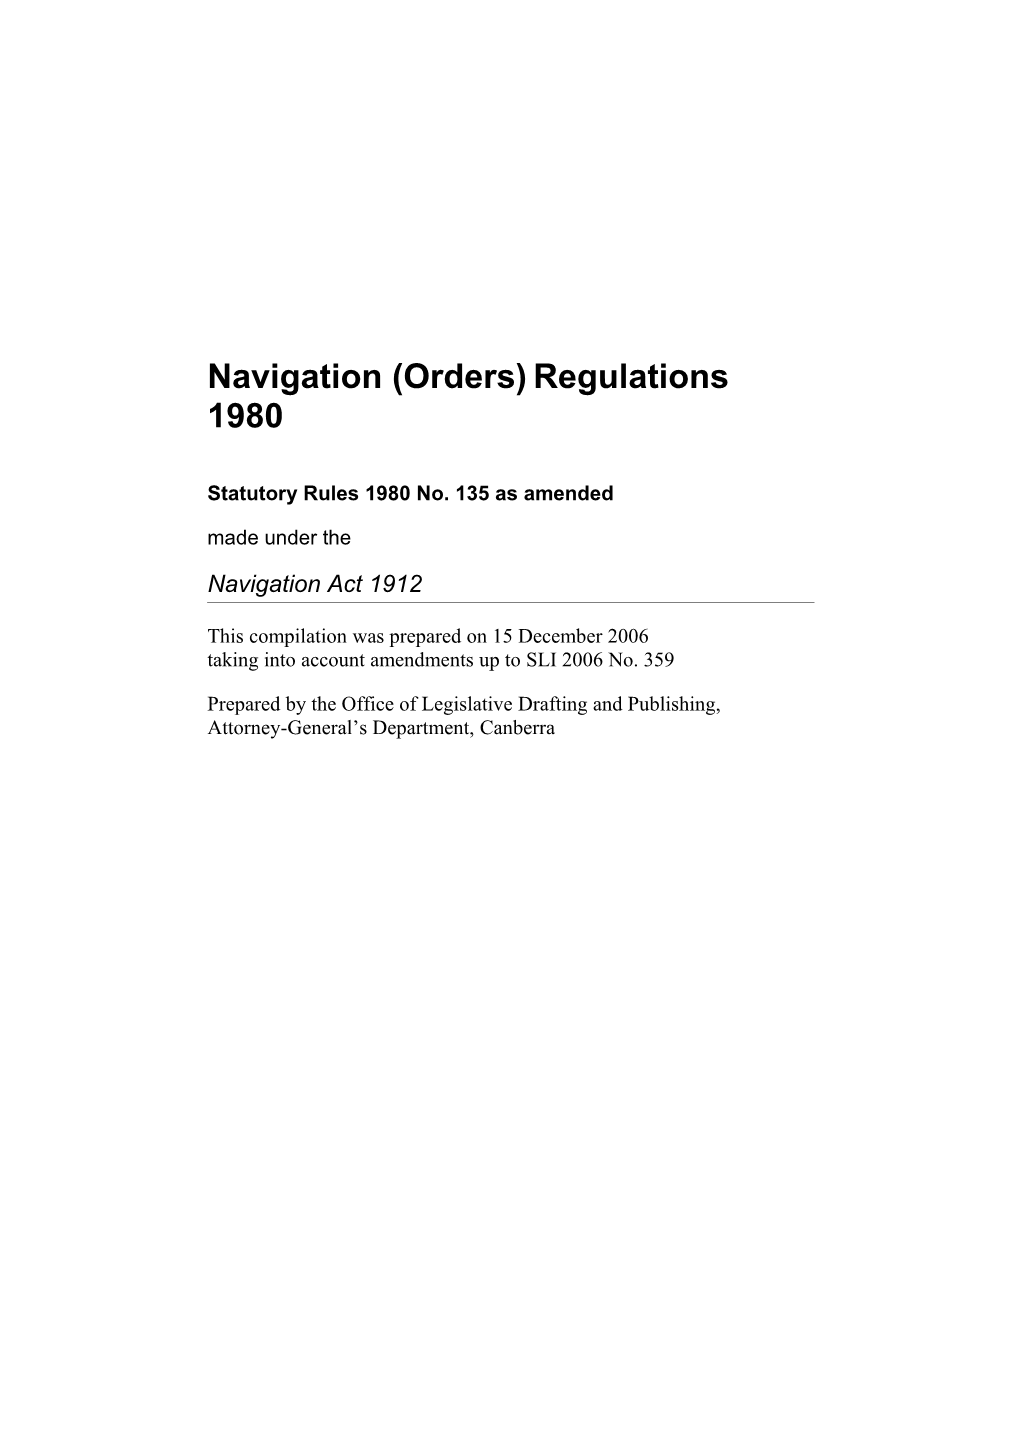 Navigation (Orders)Regulations 1980